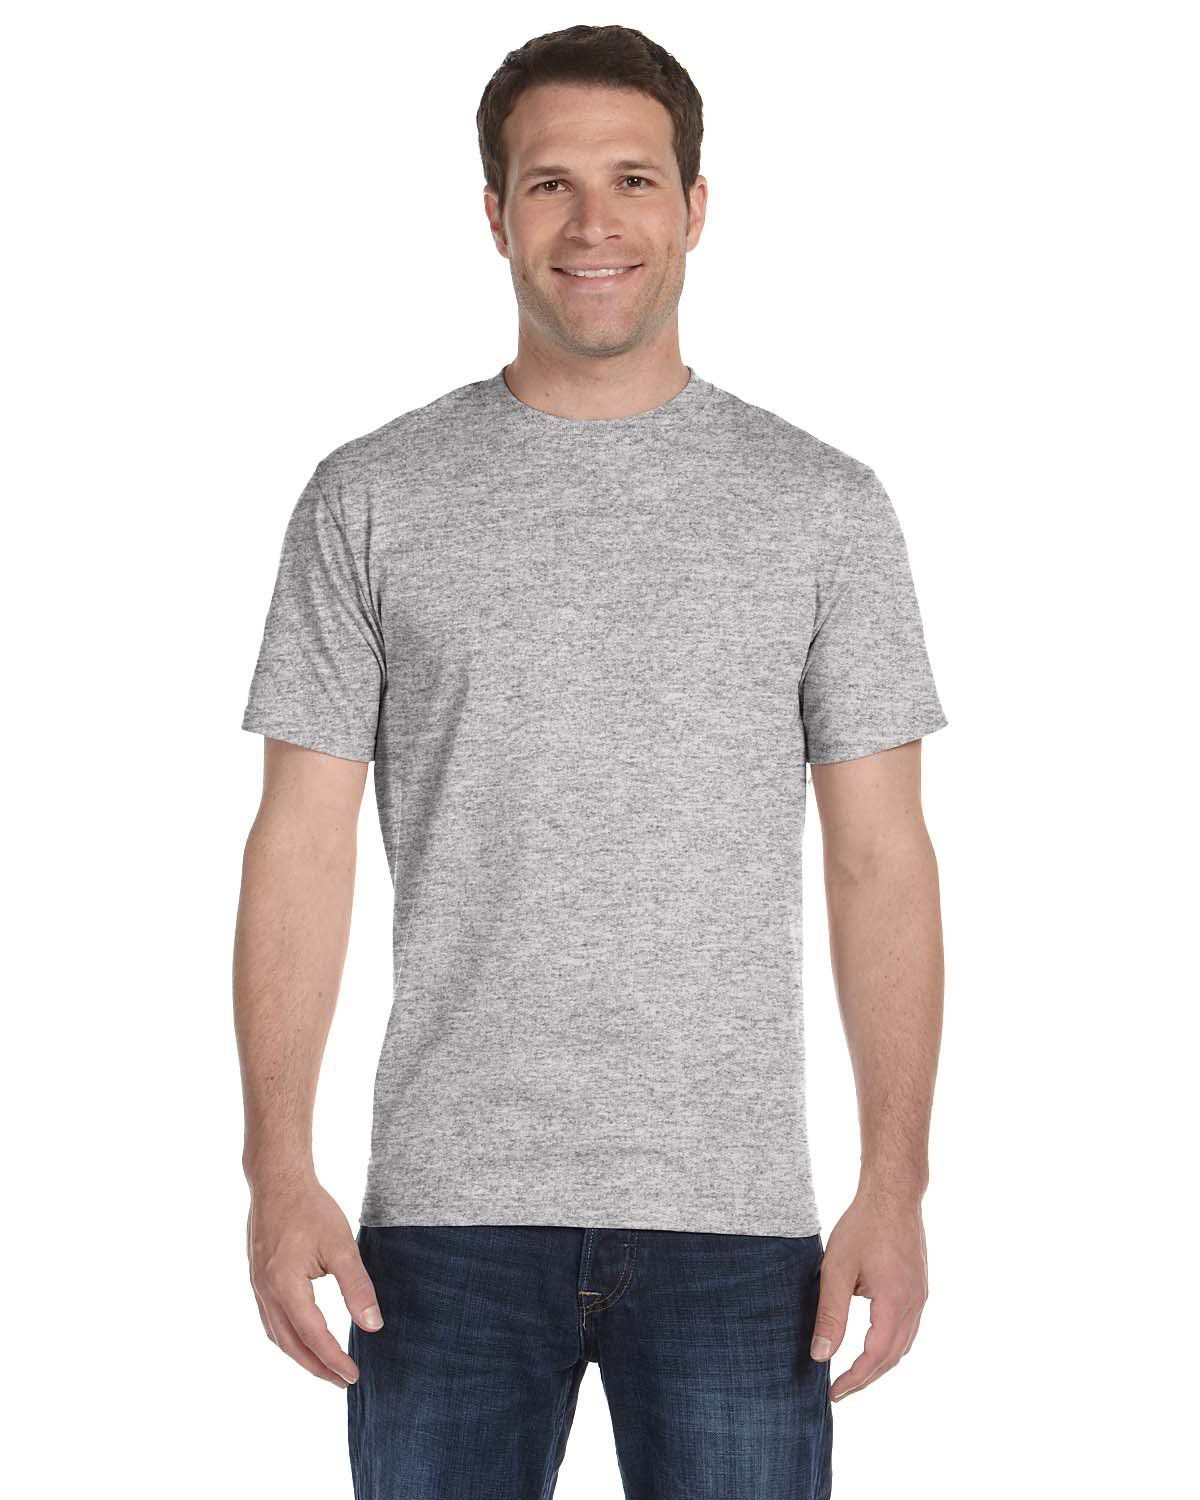 Hanes – ComfortSoft 100% Cotton T-Shirt. 5280 – Dynasty Custom